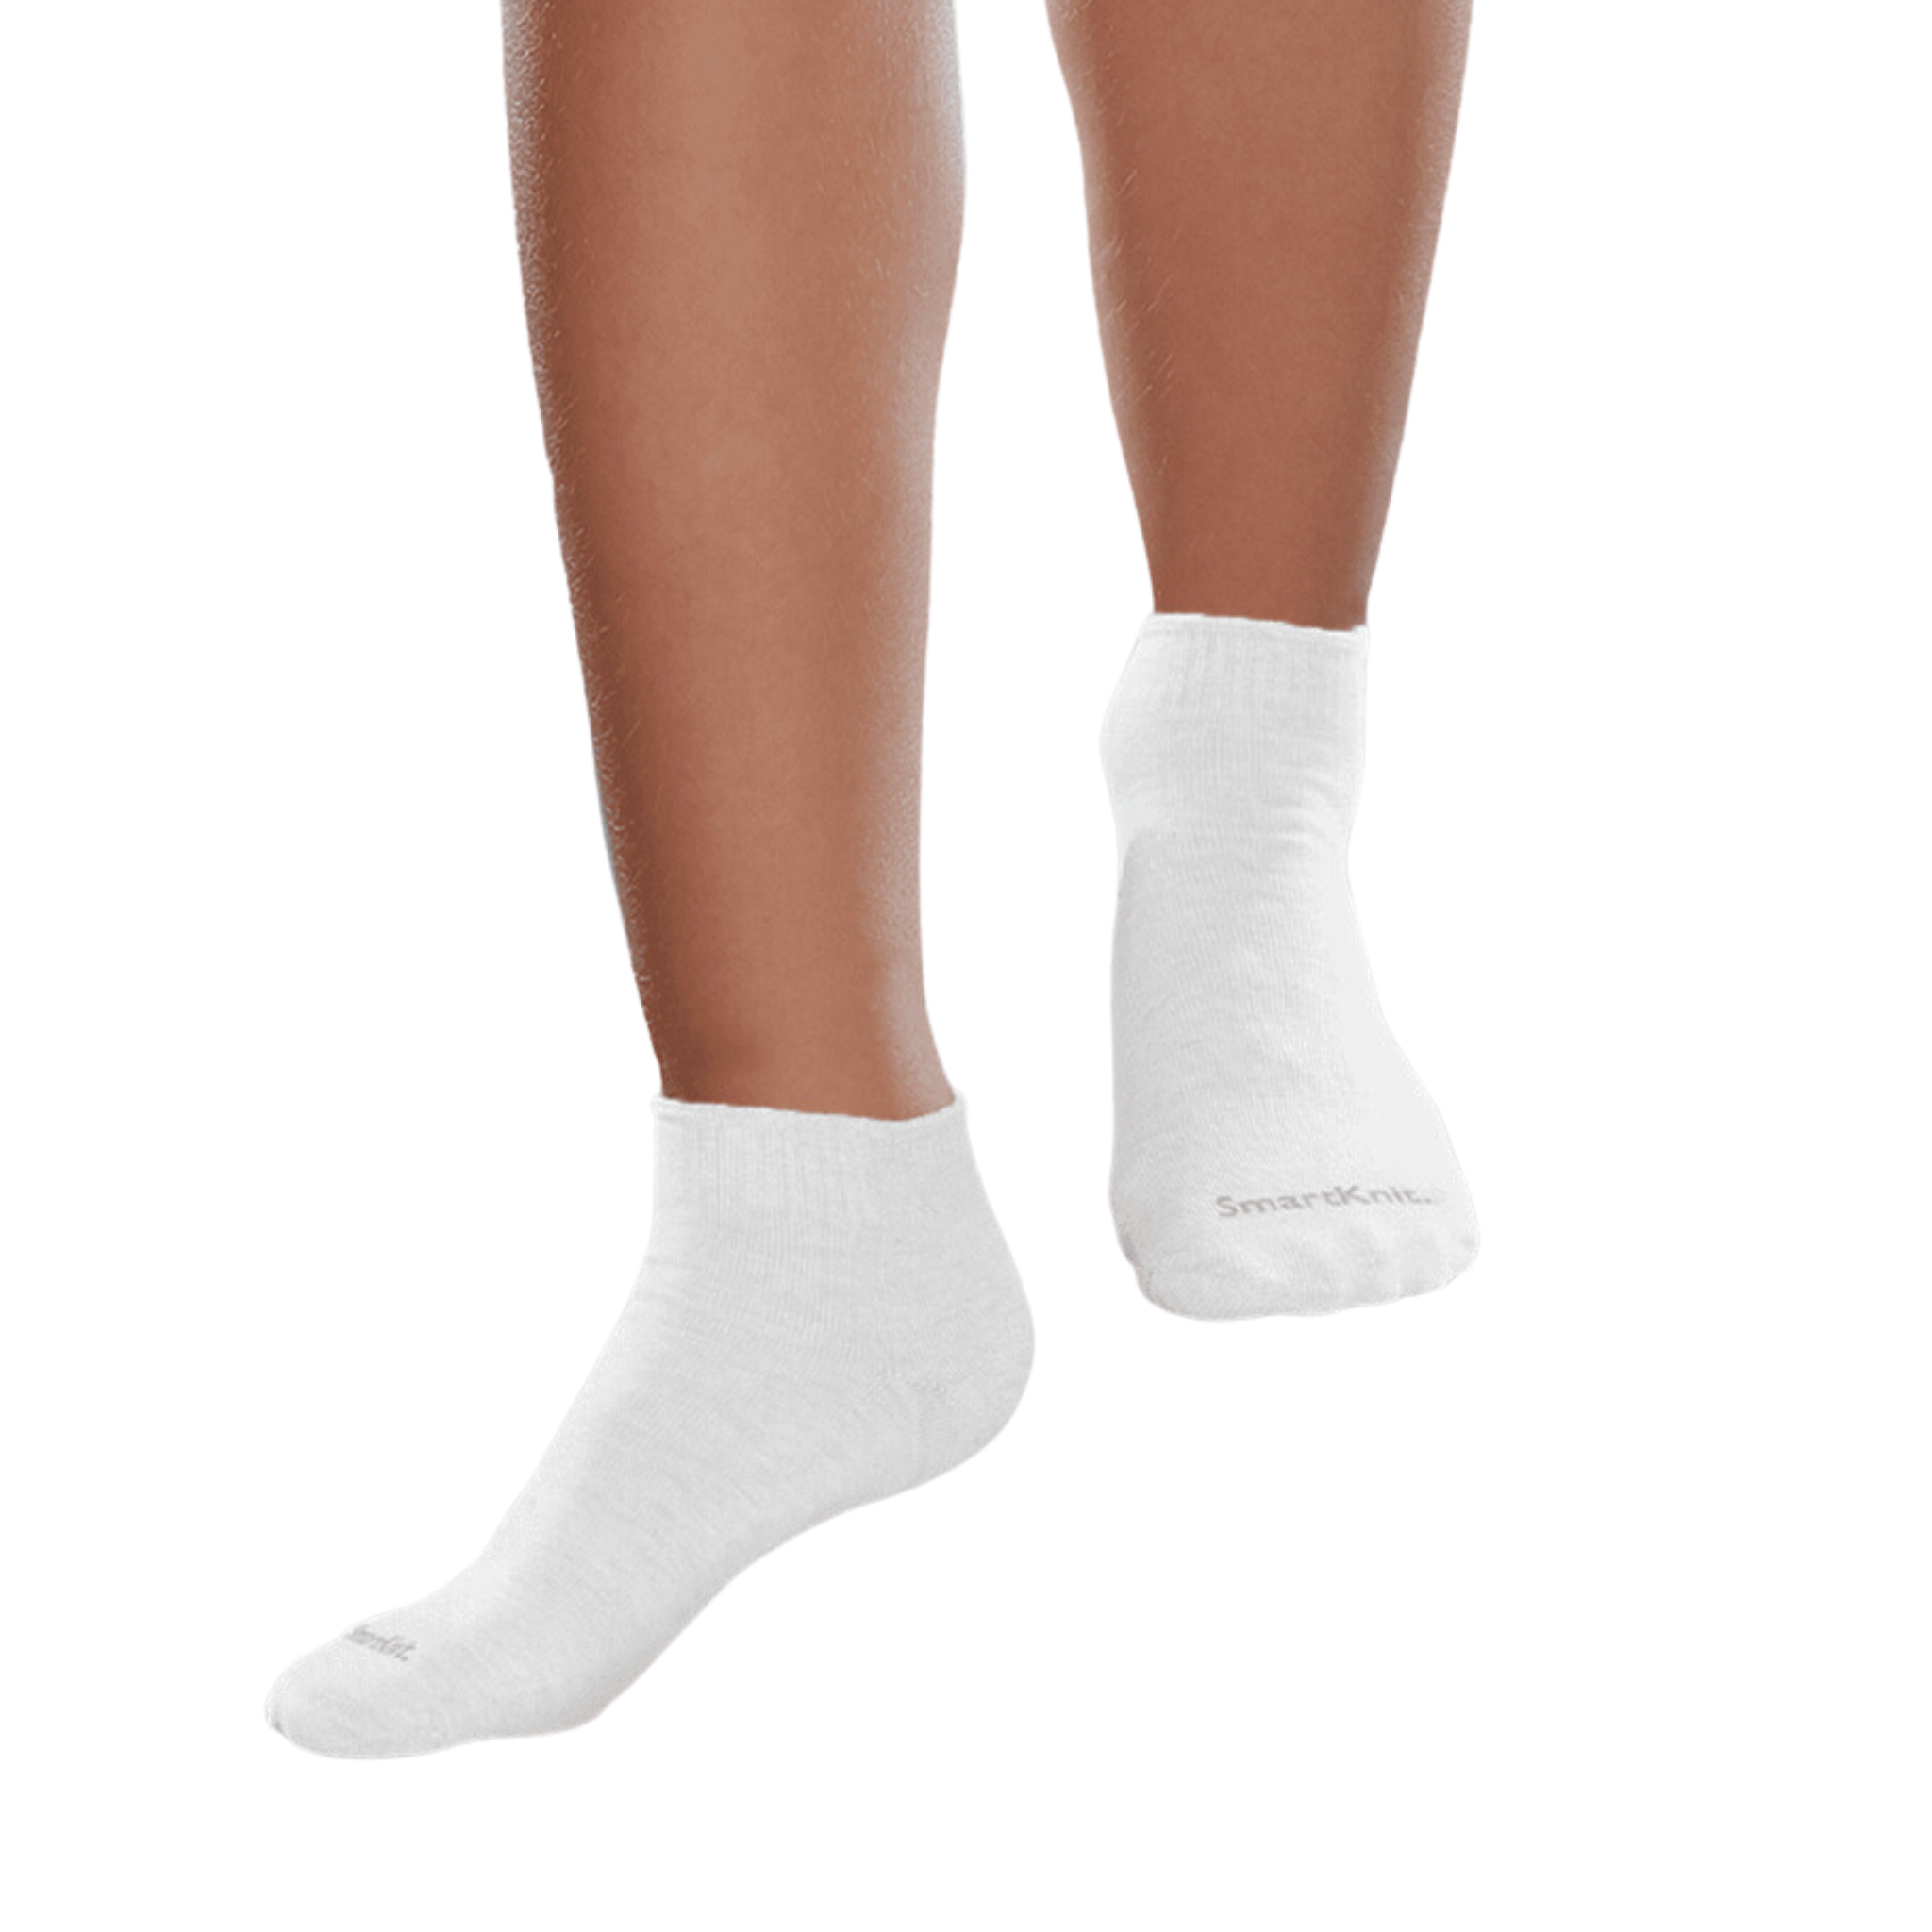 SmartKnitBIGKIDS - Truly Seamless ANKLE Socks